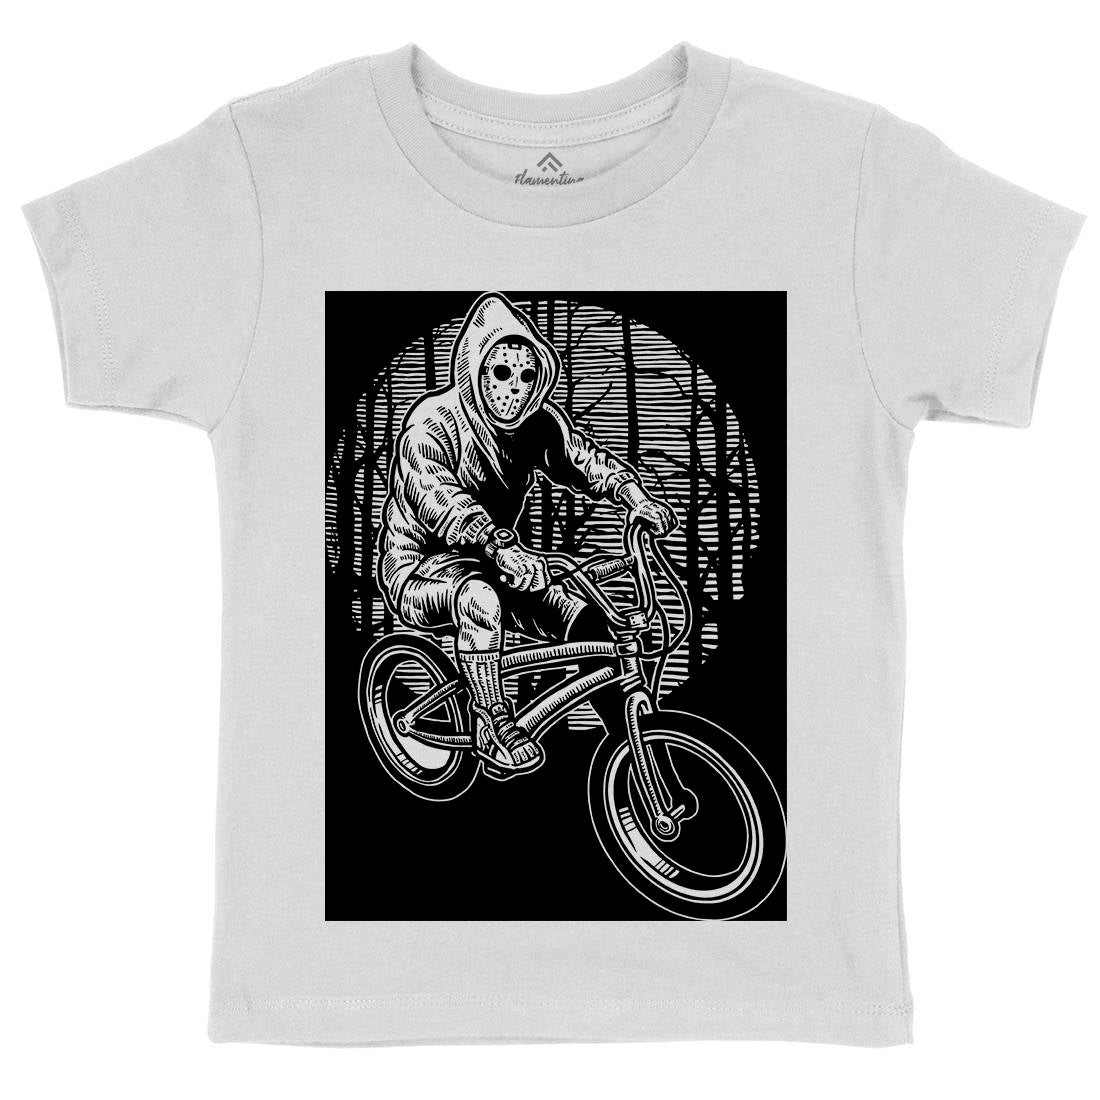 Ride Bike Kids Crew Neck T-Shirt Horror A563